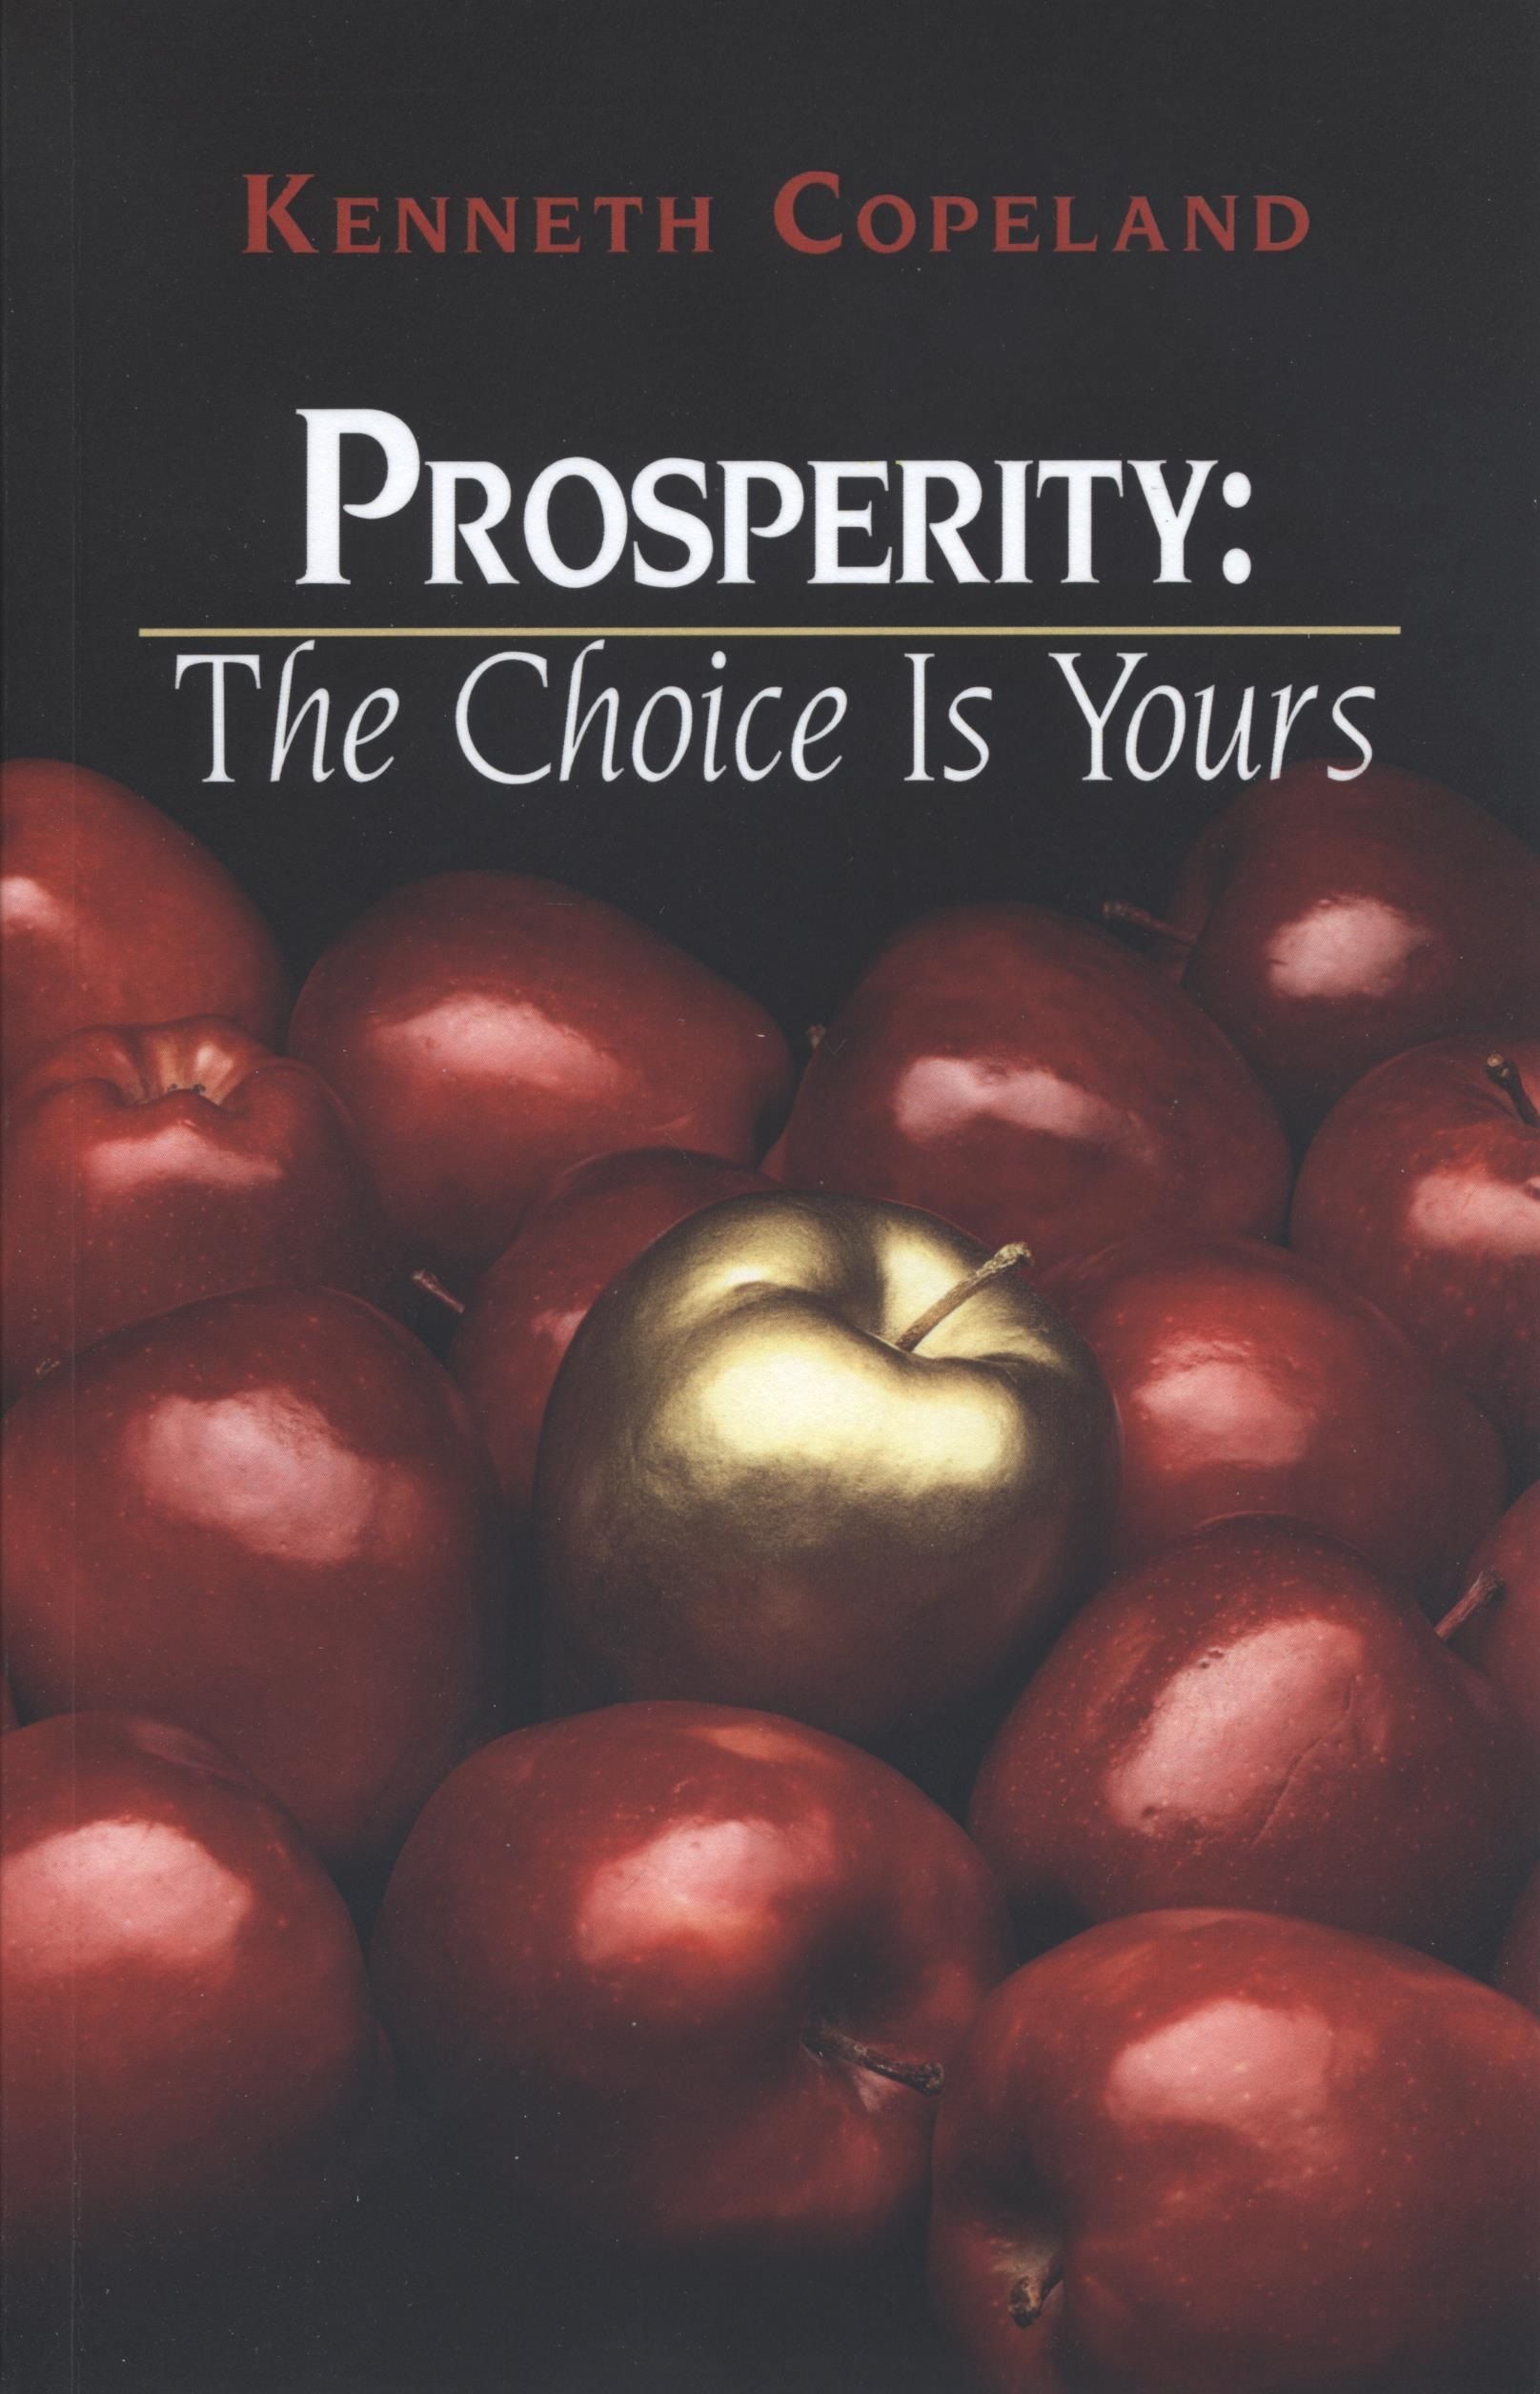 Englische Bücher - Kenneth Copeland: Prosperity - The Coice Is Yours